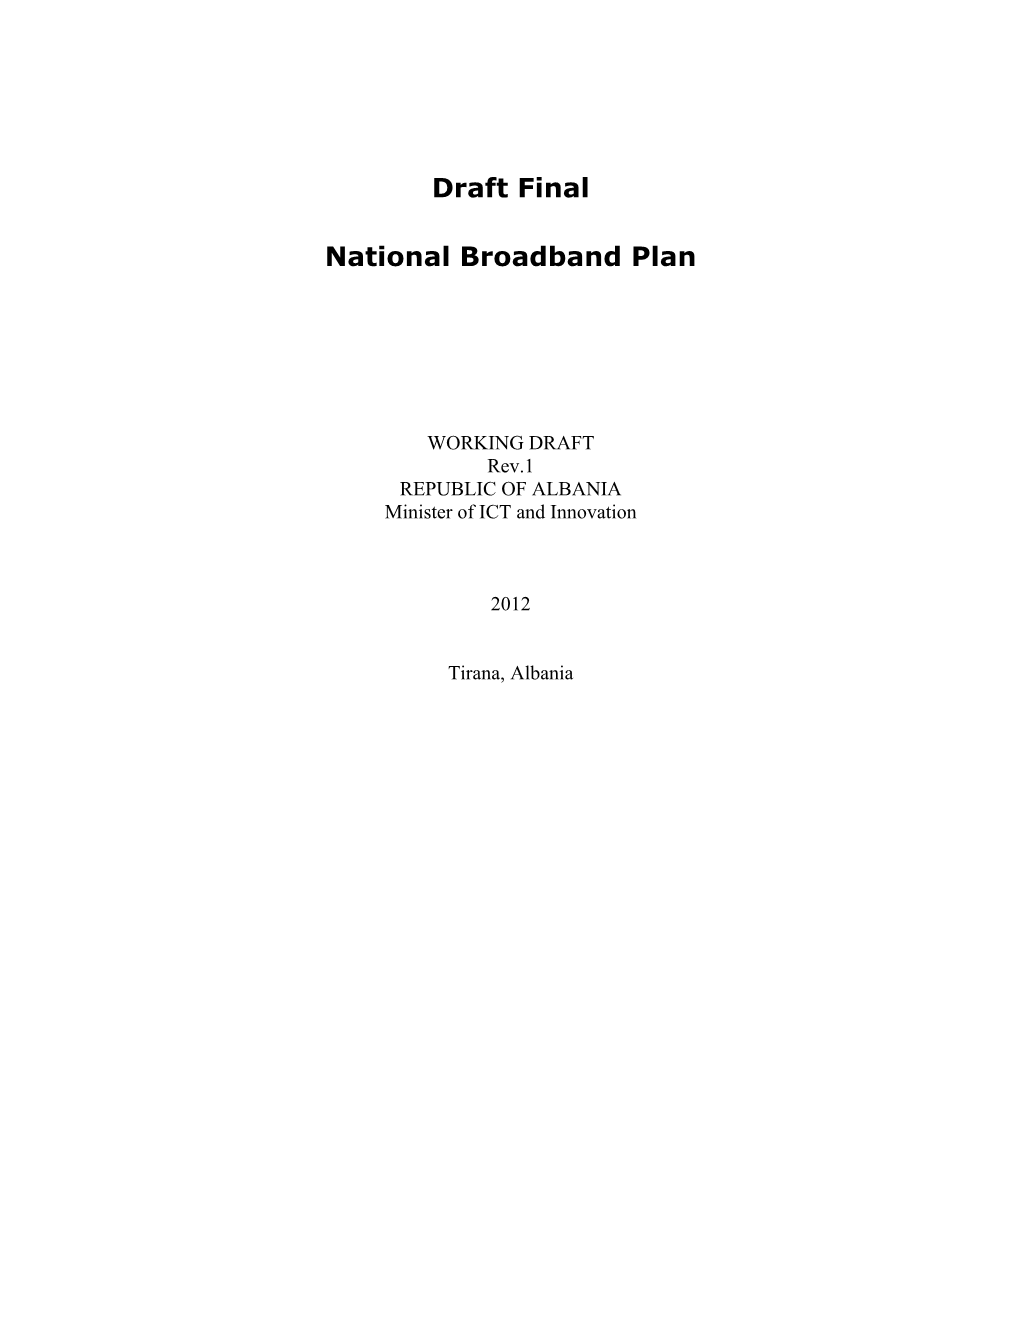 National Broadband Plan Albania 2012